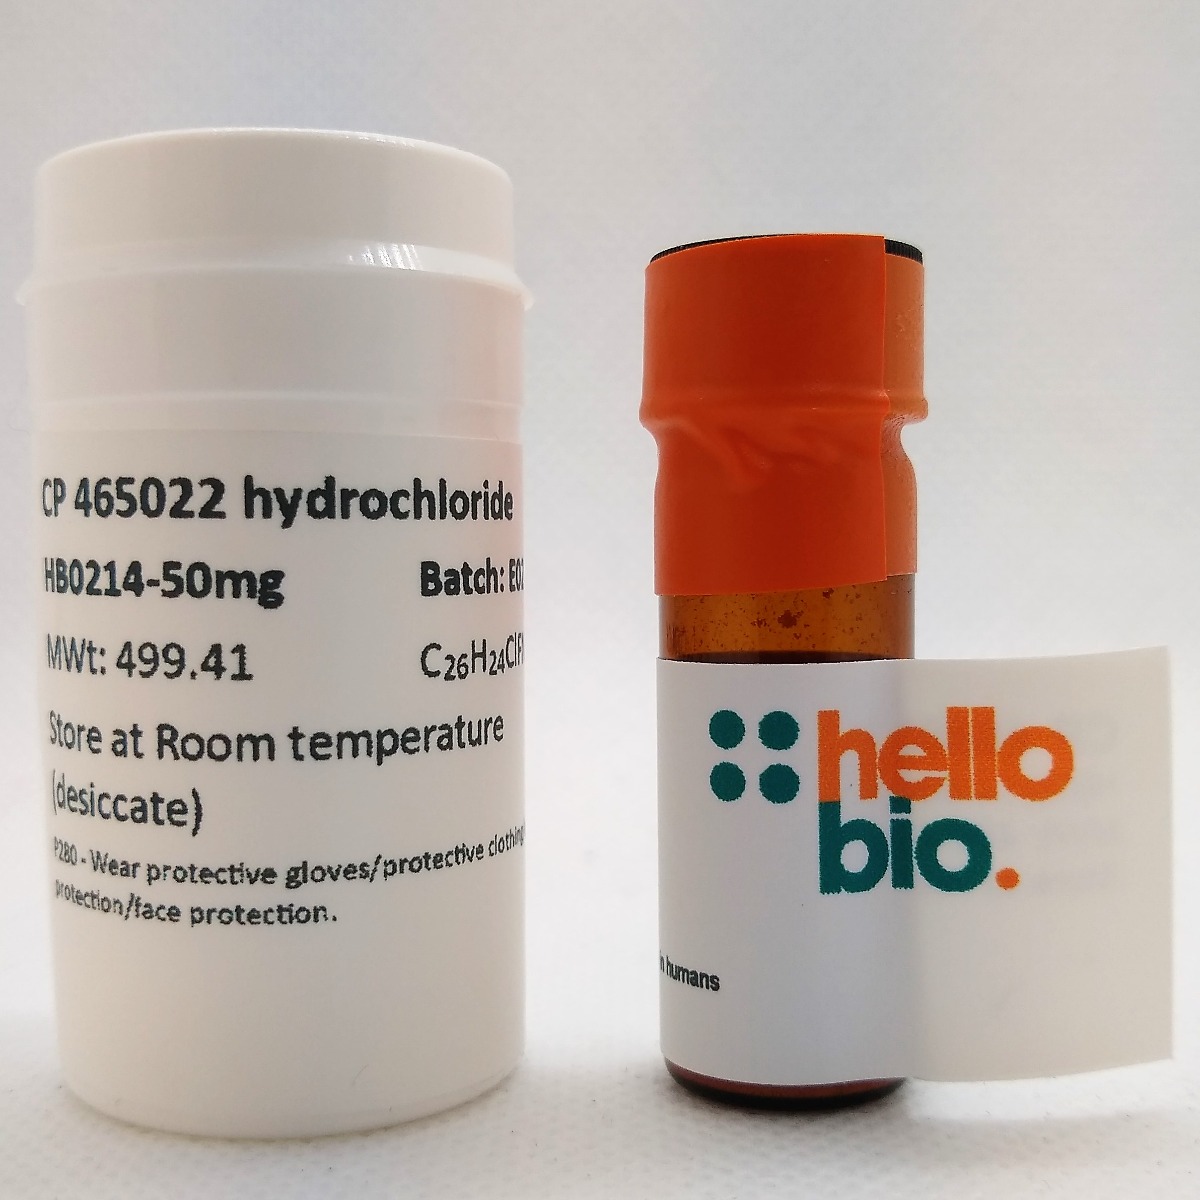 CP 465022 hydrochloride product vial image | Hello Bio